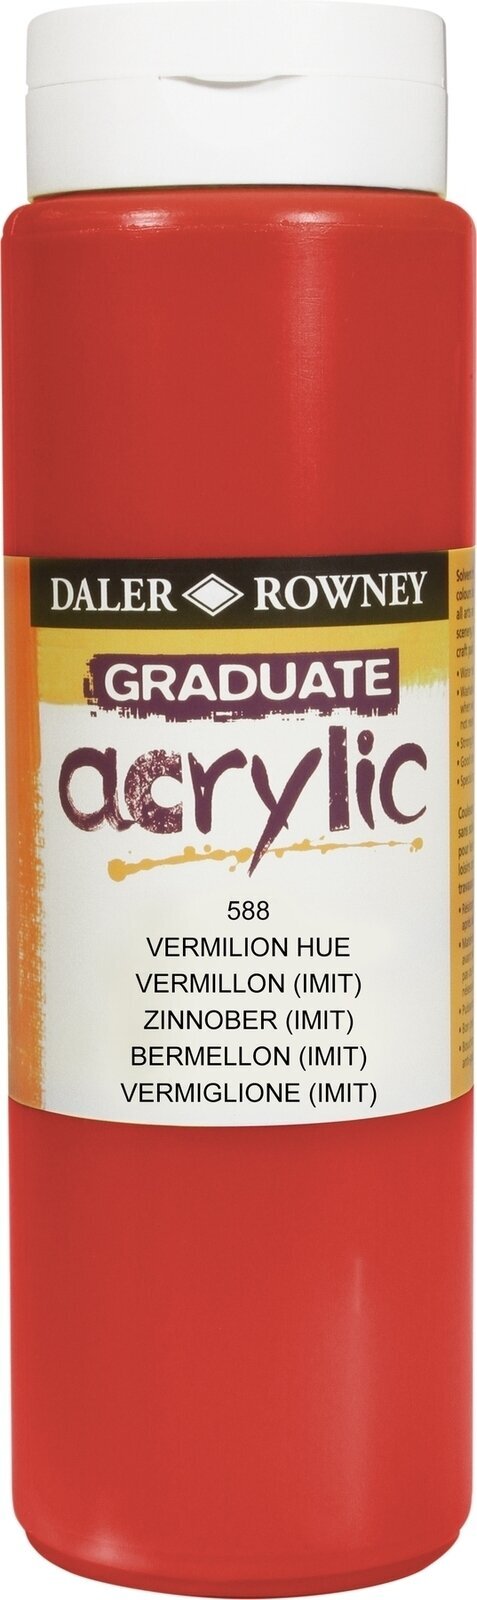 Akrylmaling Daler Rowney Graduate Akrylmaling Vermilion Hue 500 ml 1 stk.